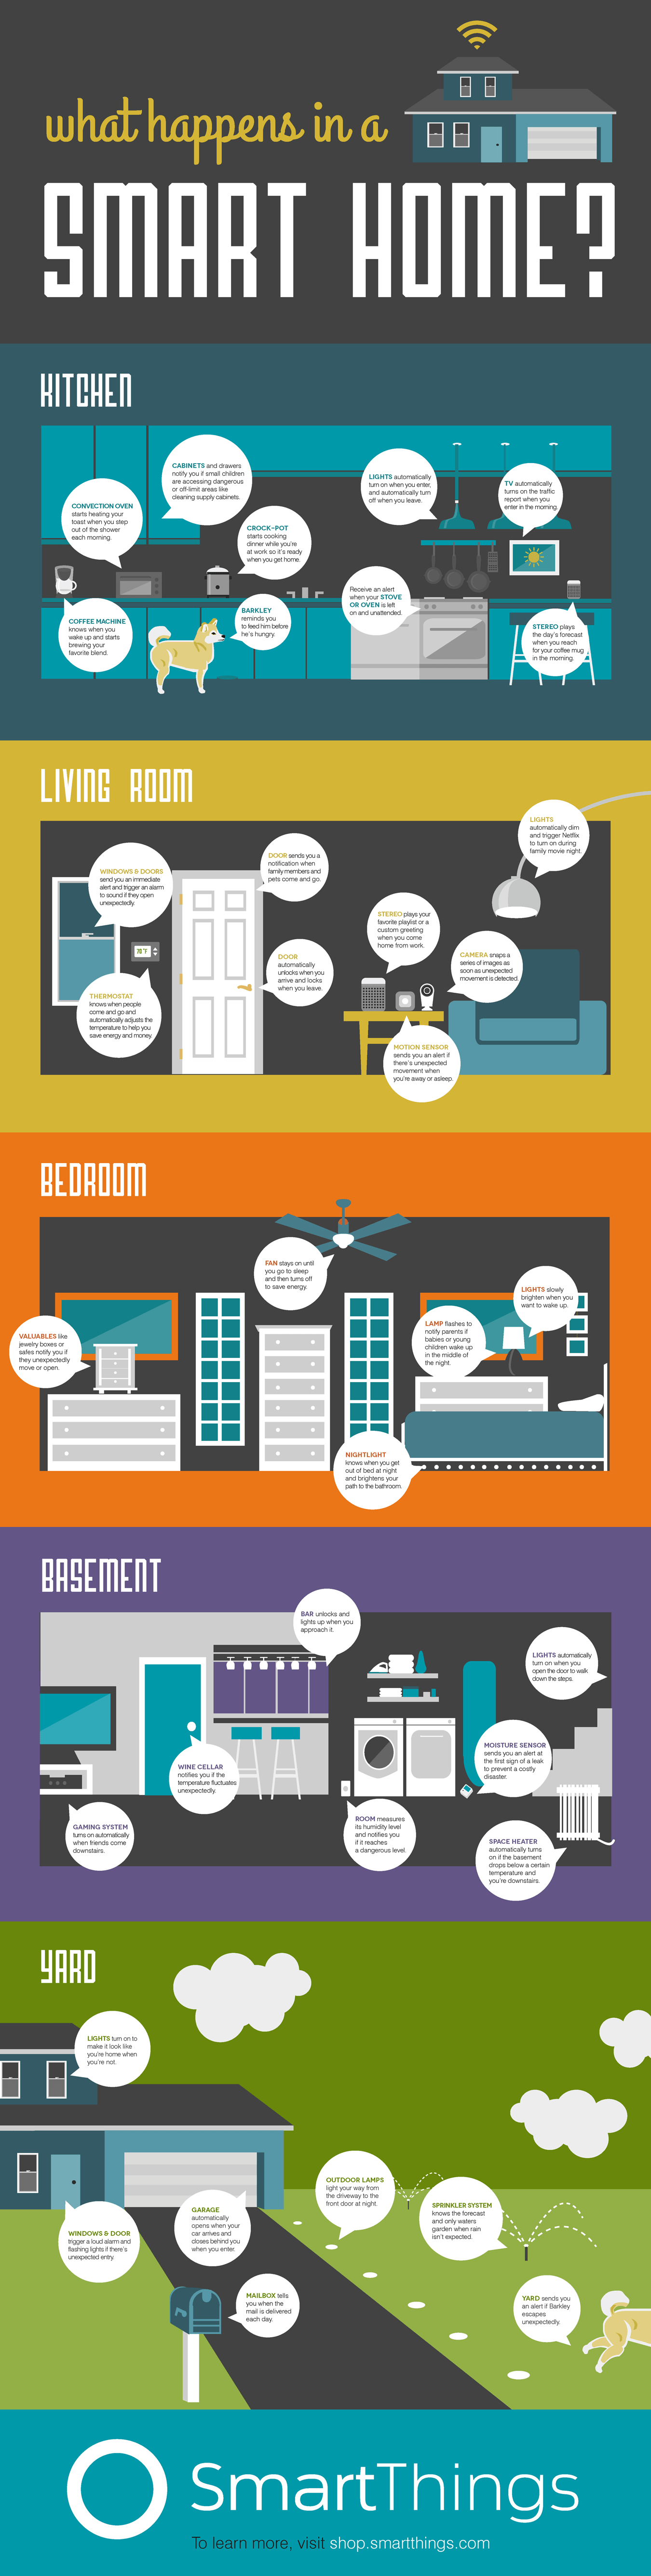 smarthome-infographic